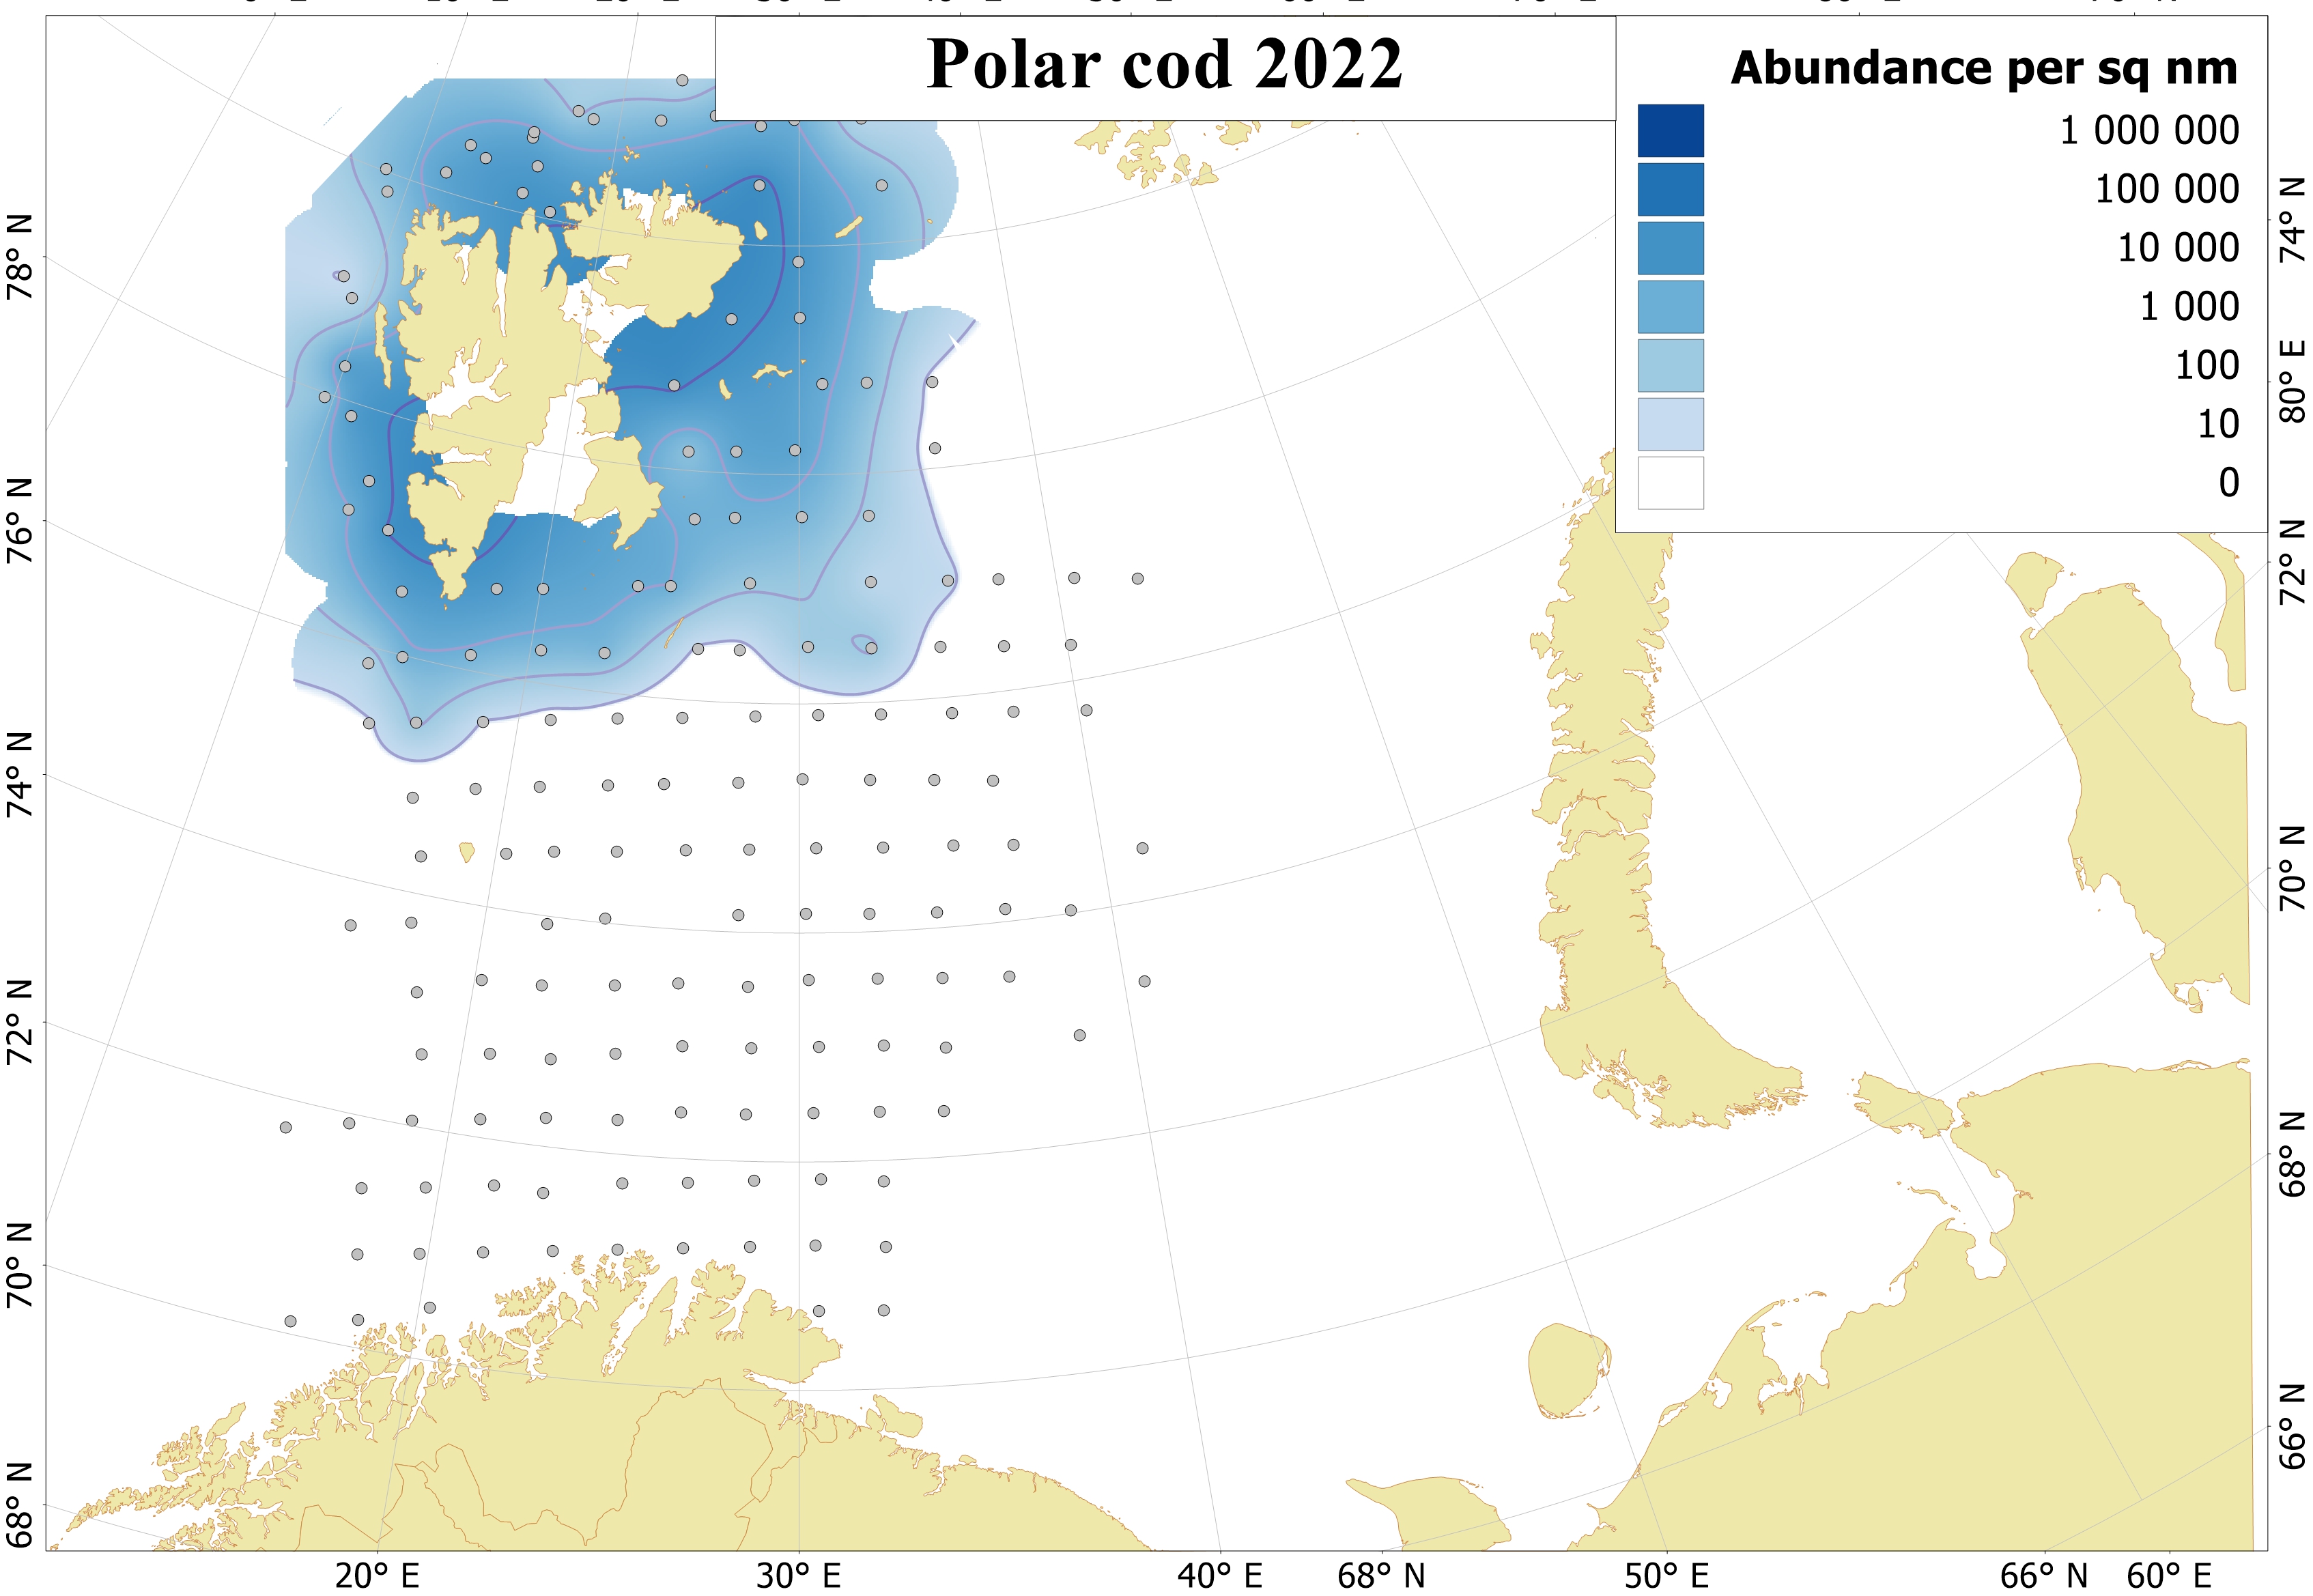 Ch 6 Distribution of 0-group polar cod 2022